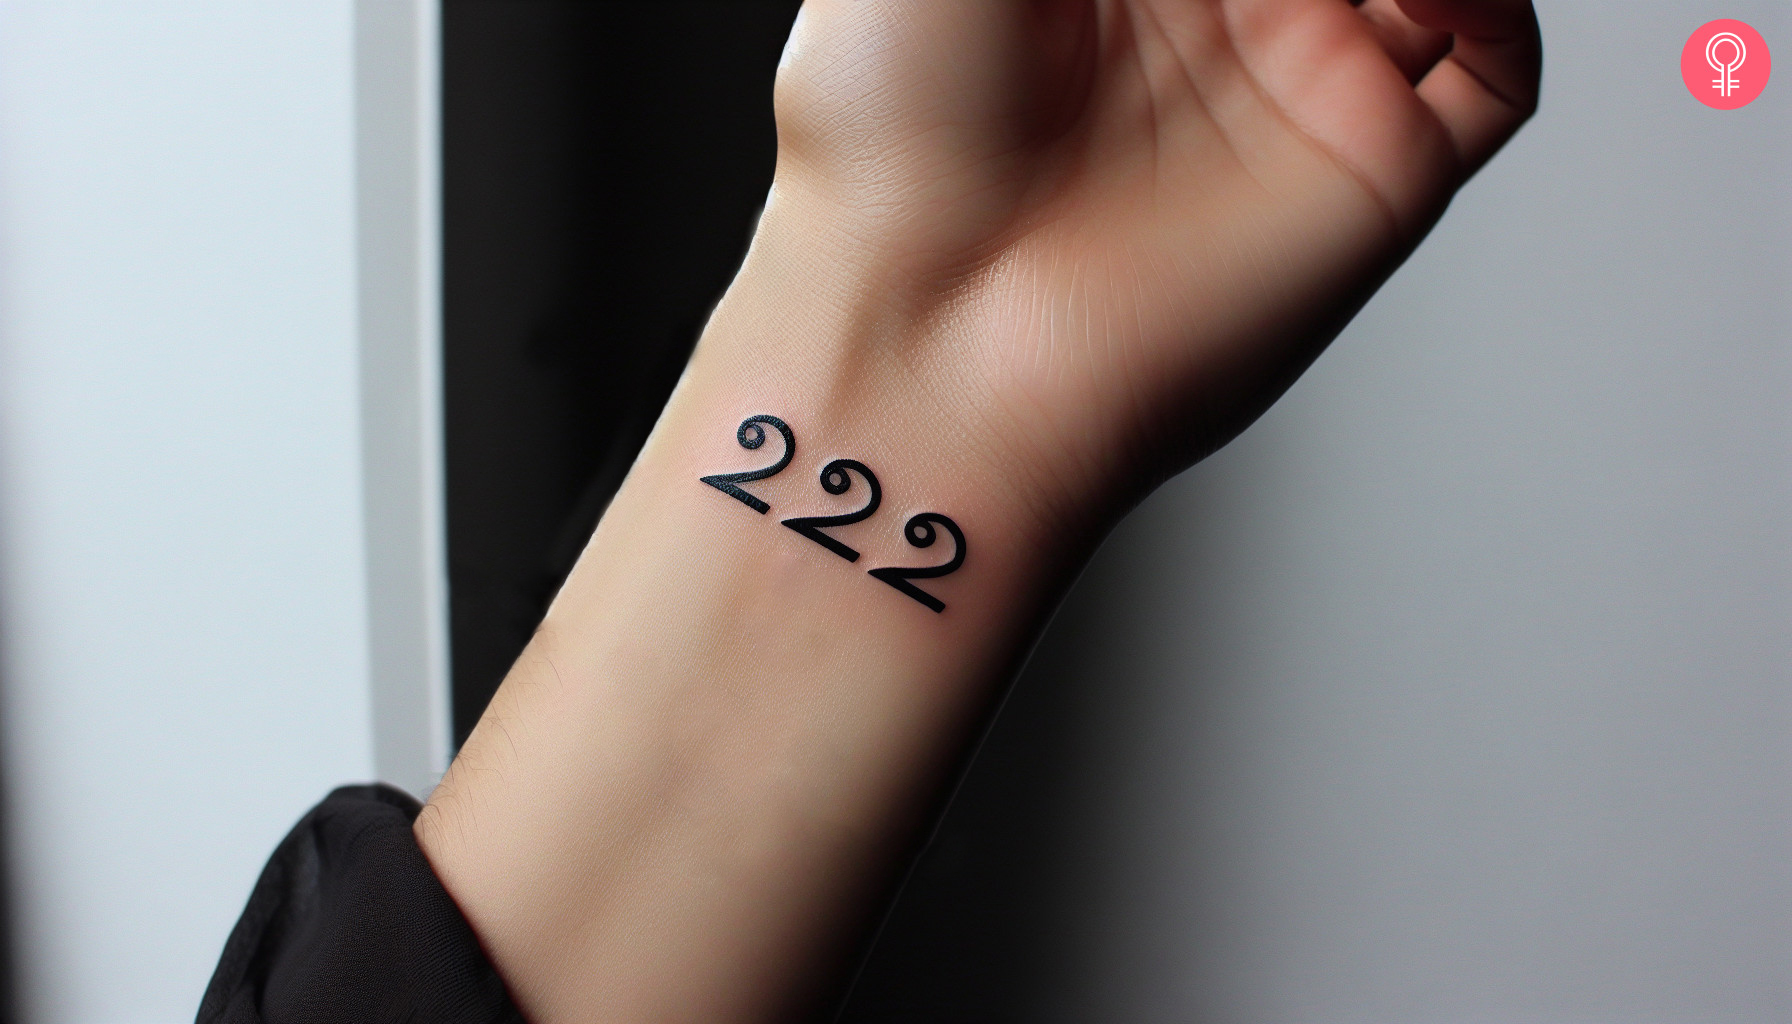 A 222 wrist tattoo on a woman’s wrist